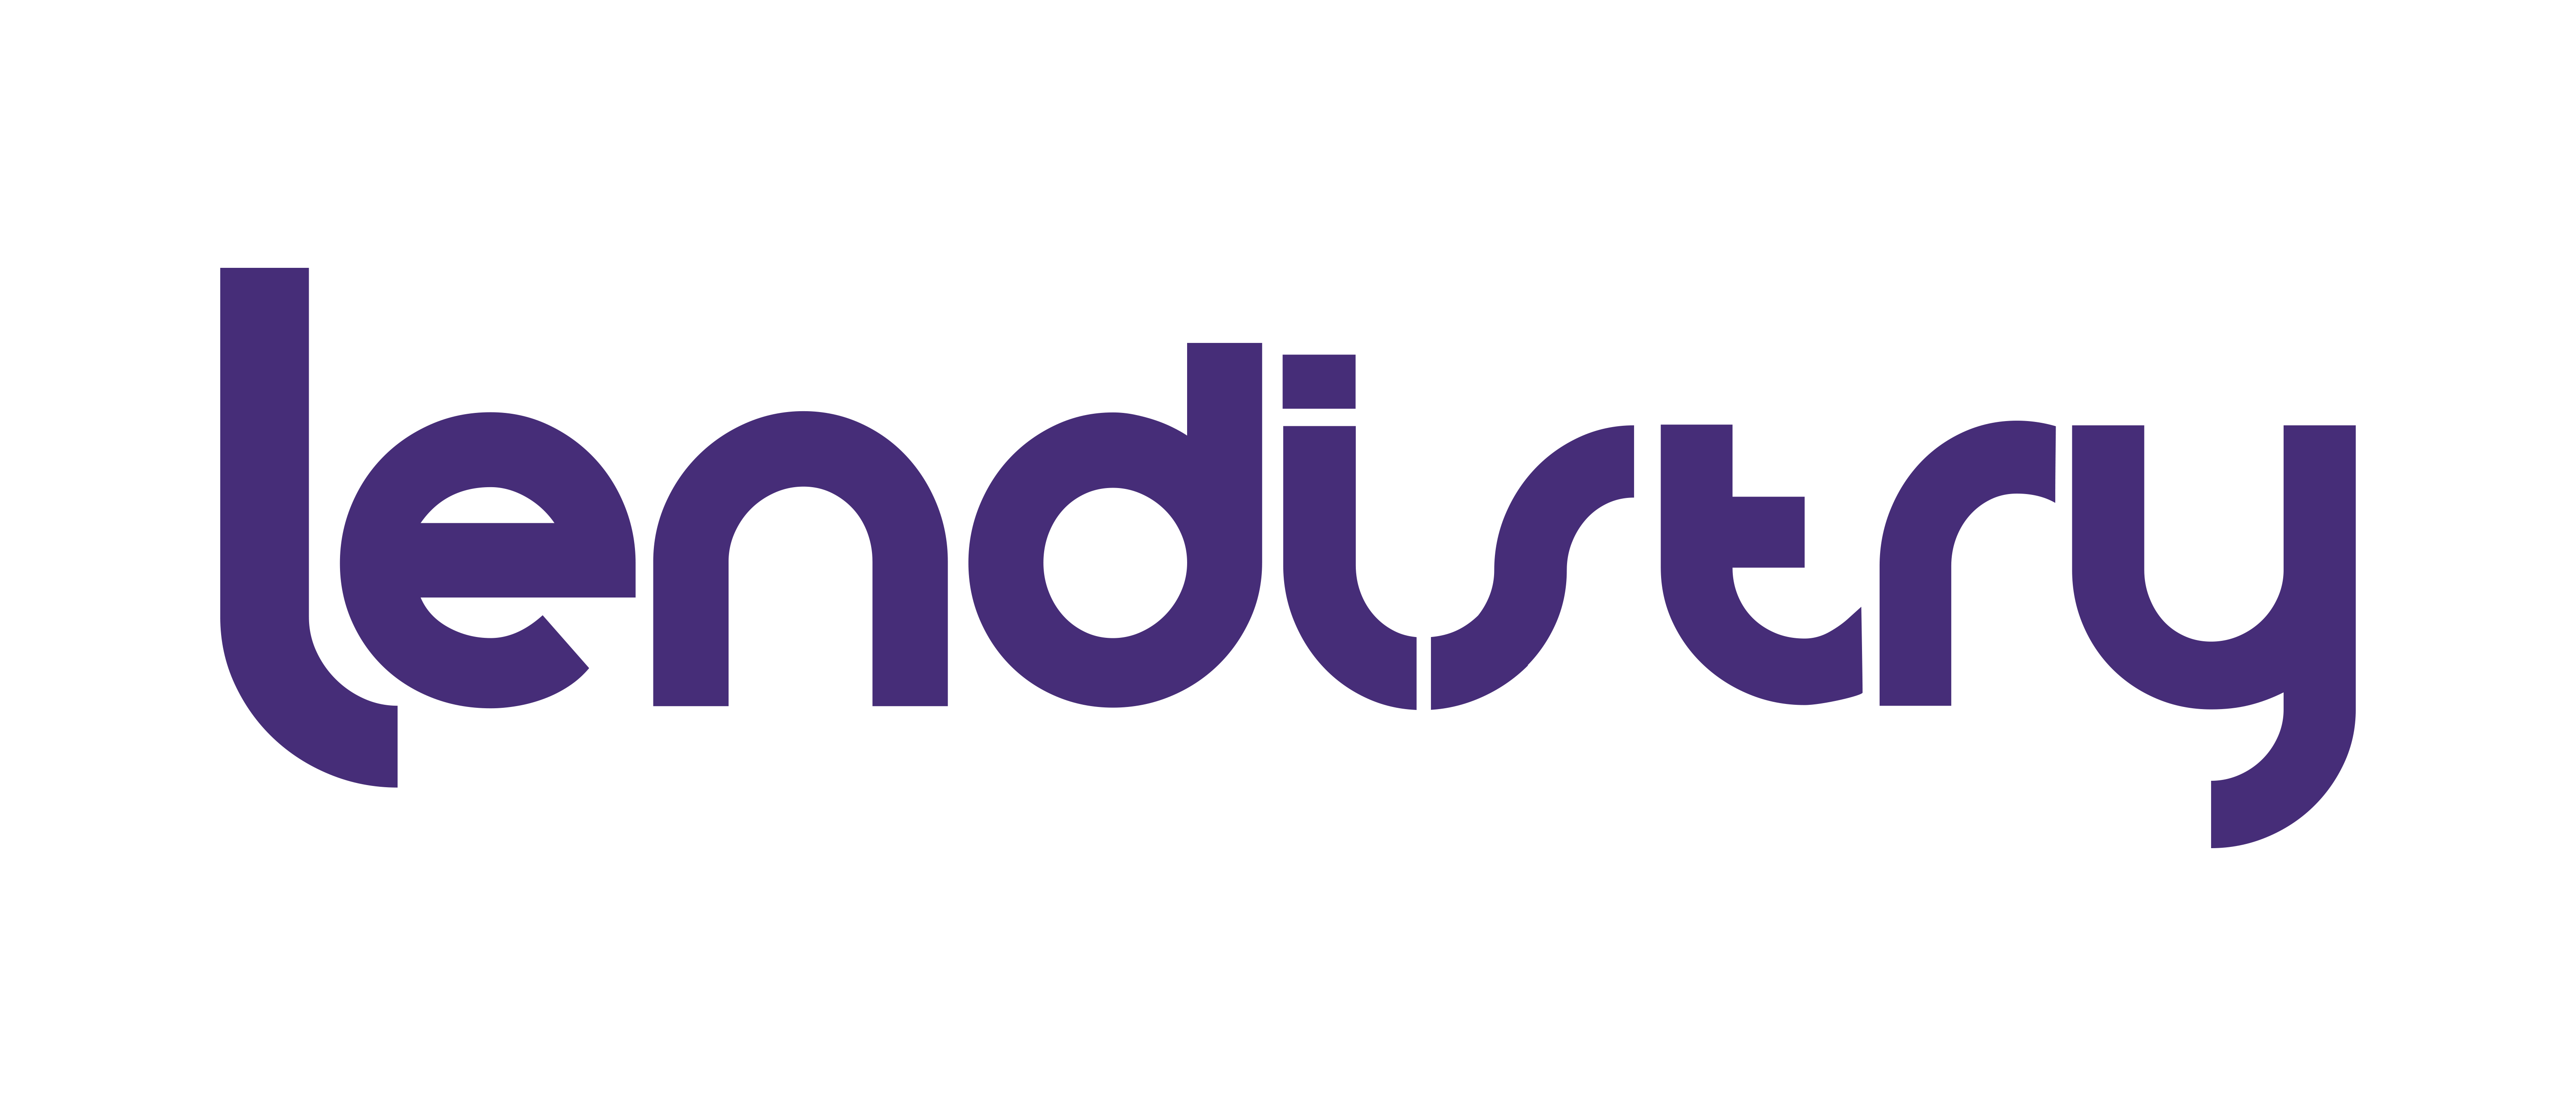 Lendistry logo